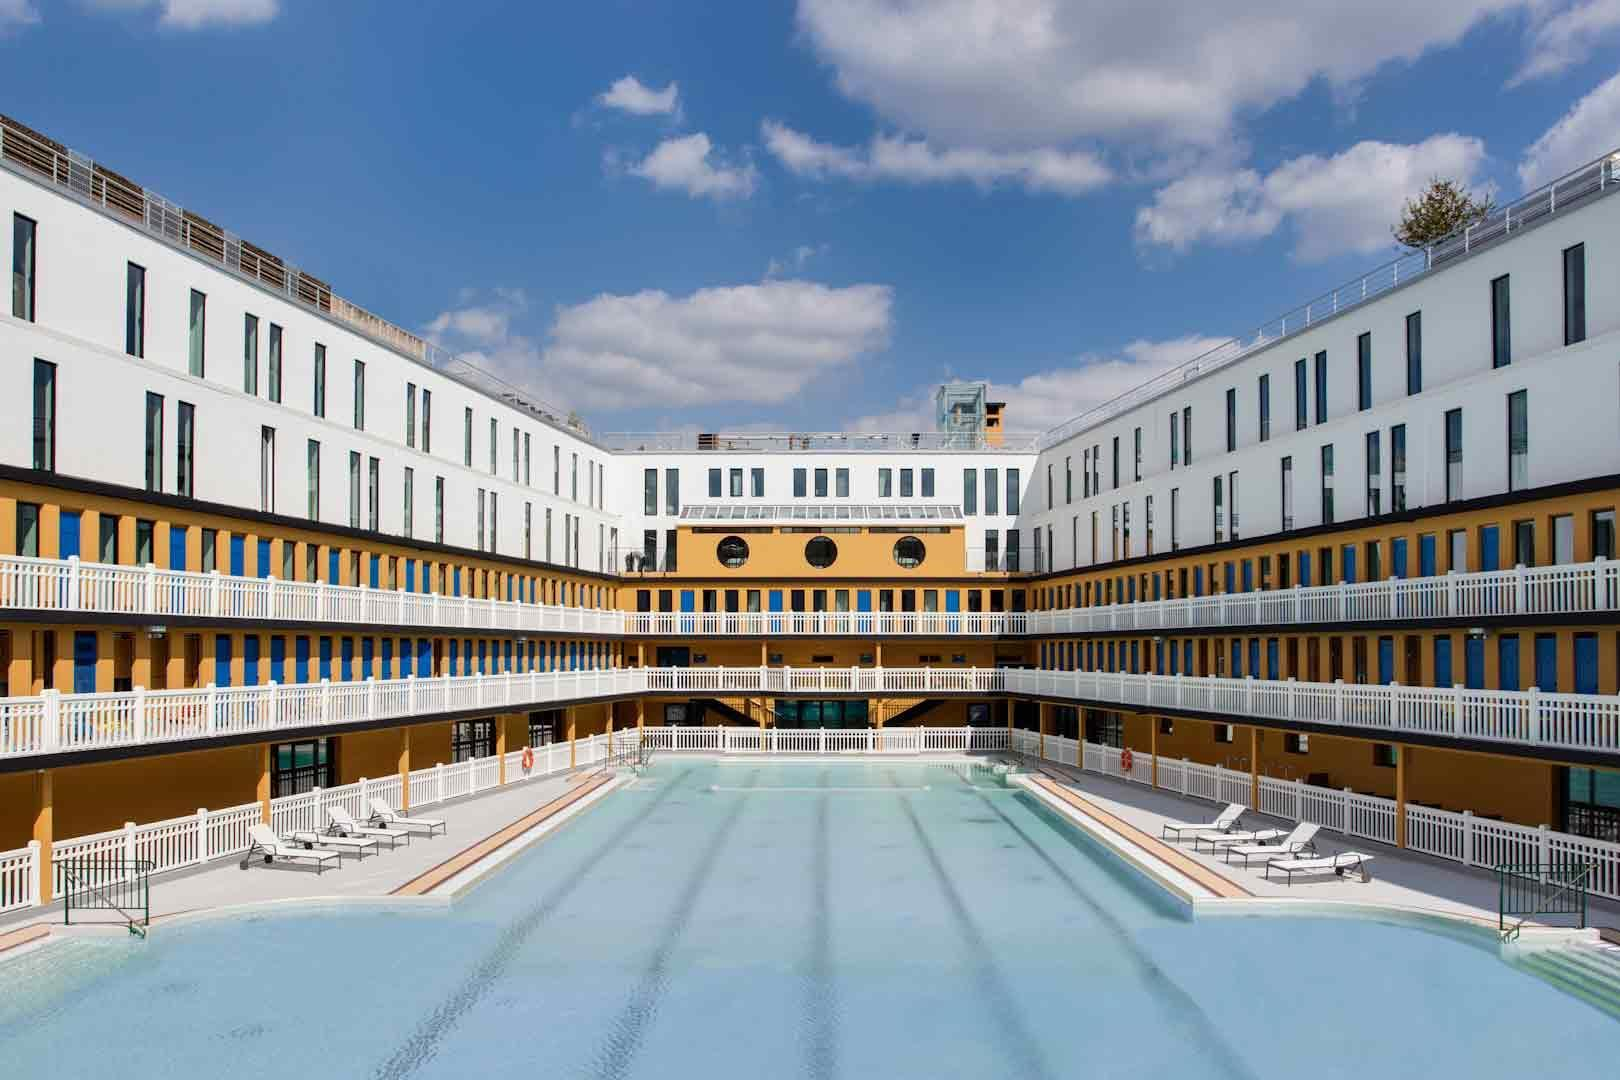 Hôtel Hotel Molitor, Paris - Trivago.fr dedans Piscine Molitor Prix